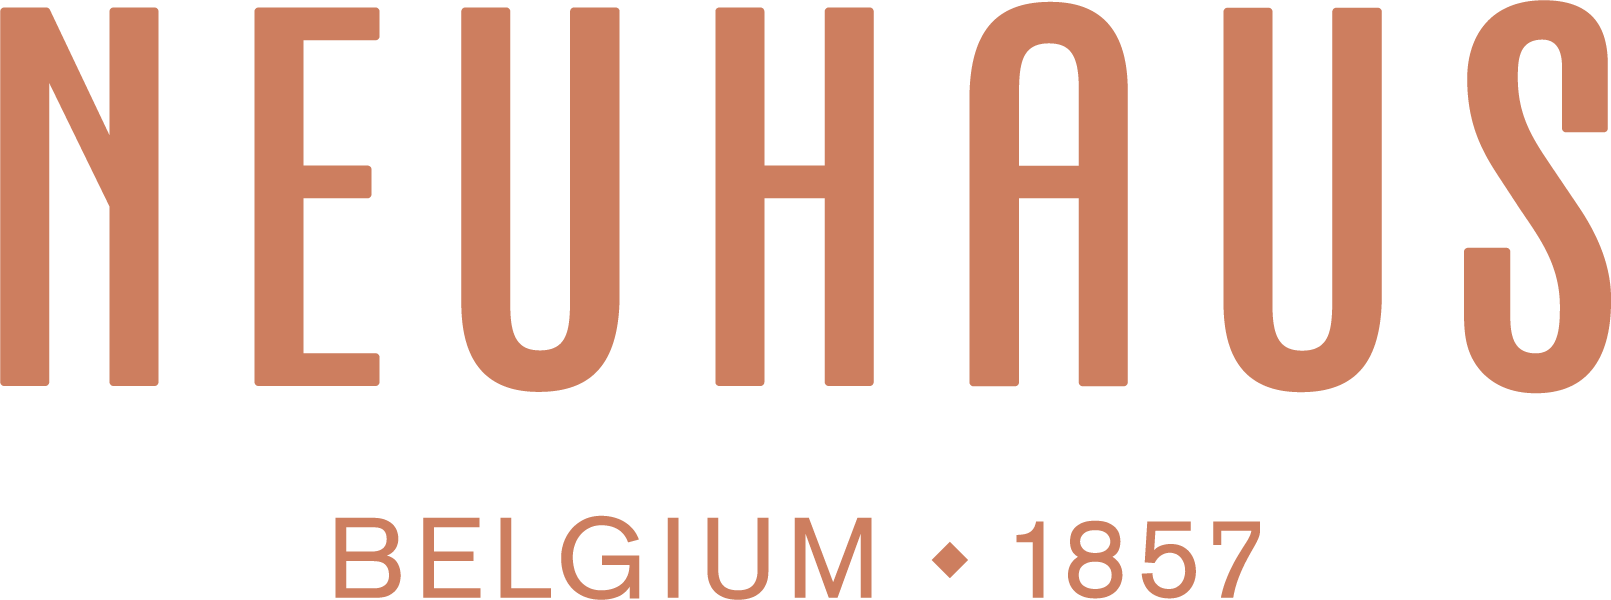 Neuhaus logo